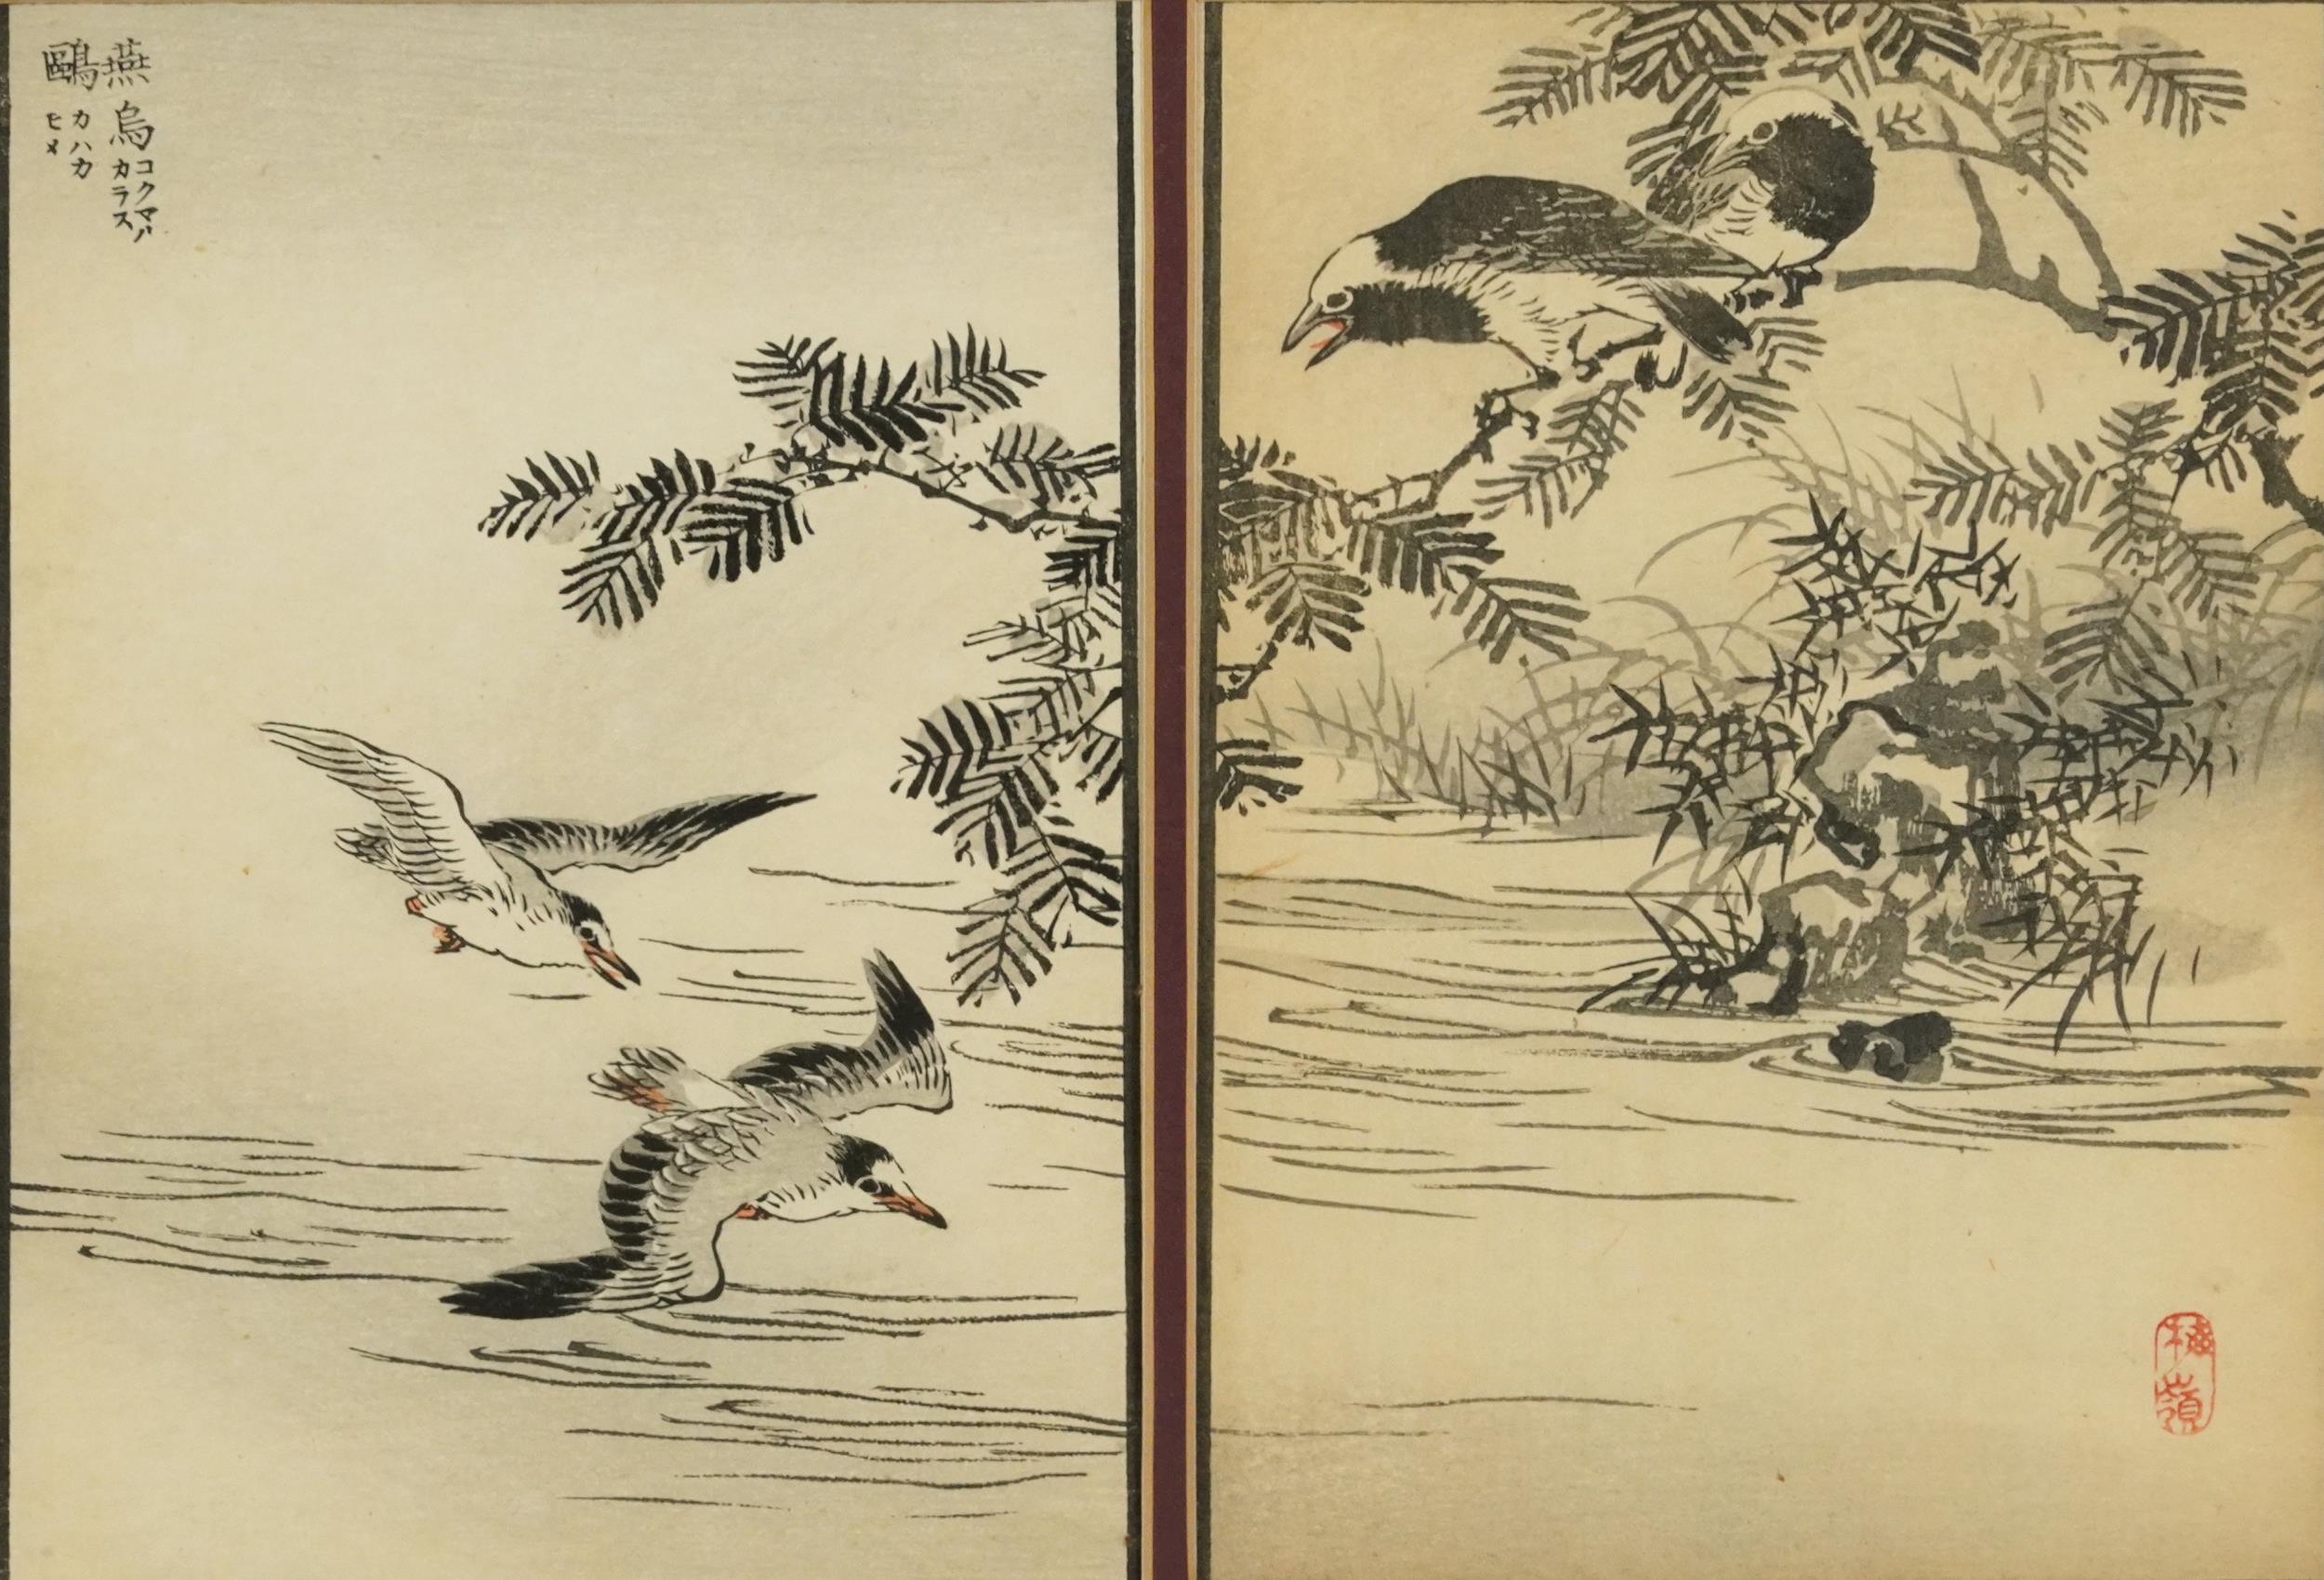 Kono Naotoyo Bairei - Birds in flight and birds above water, pair of Japanese woodblock prints